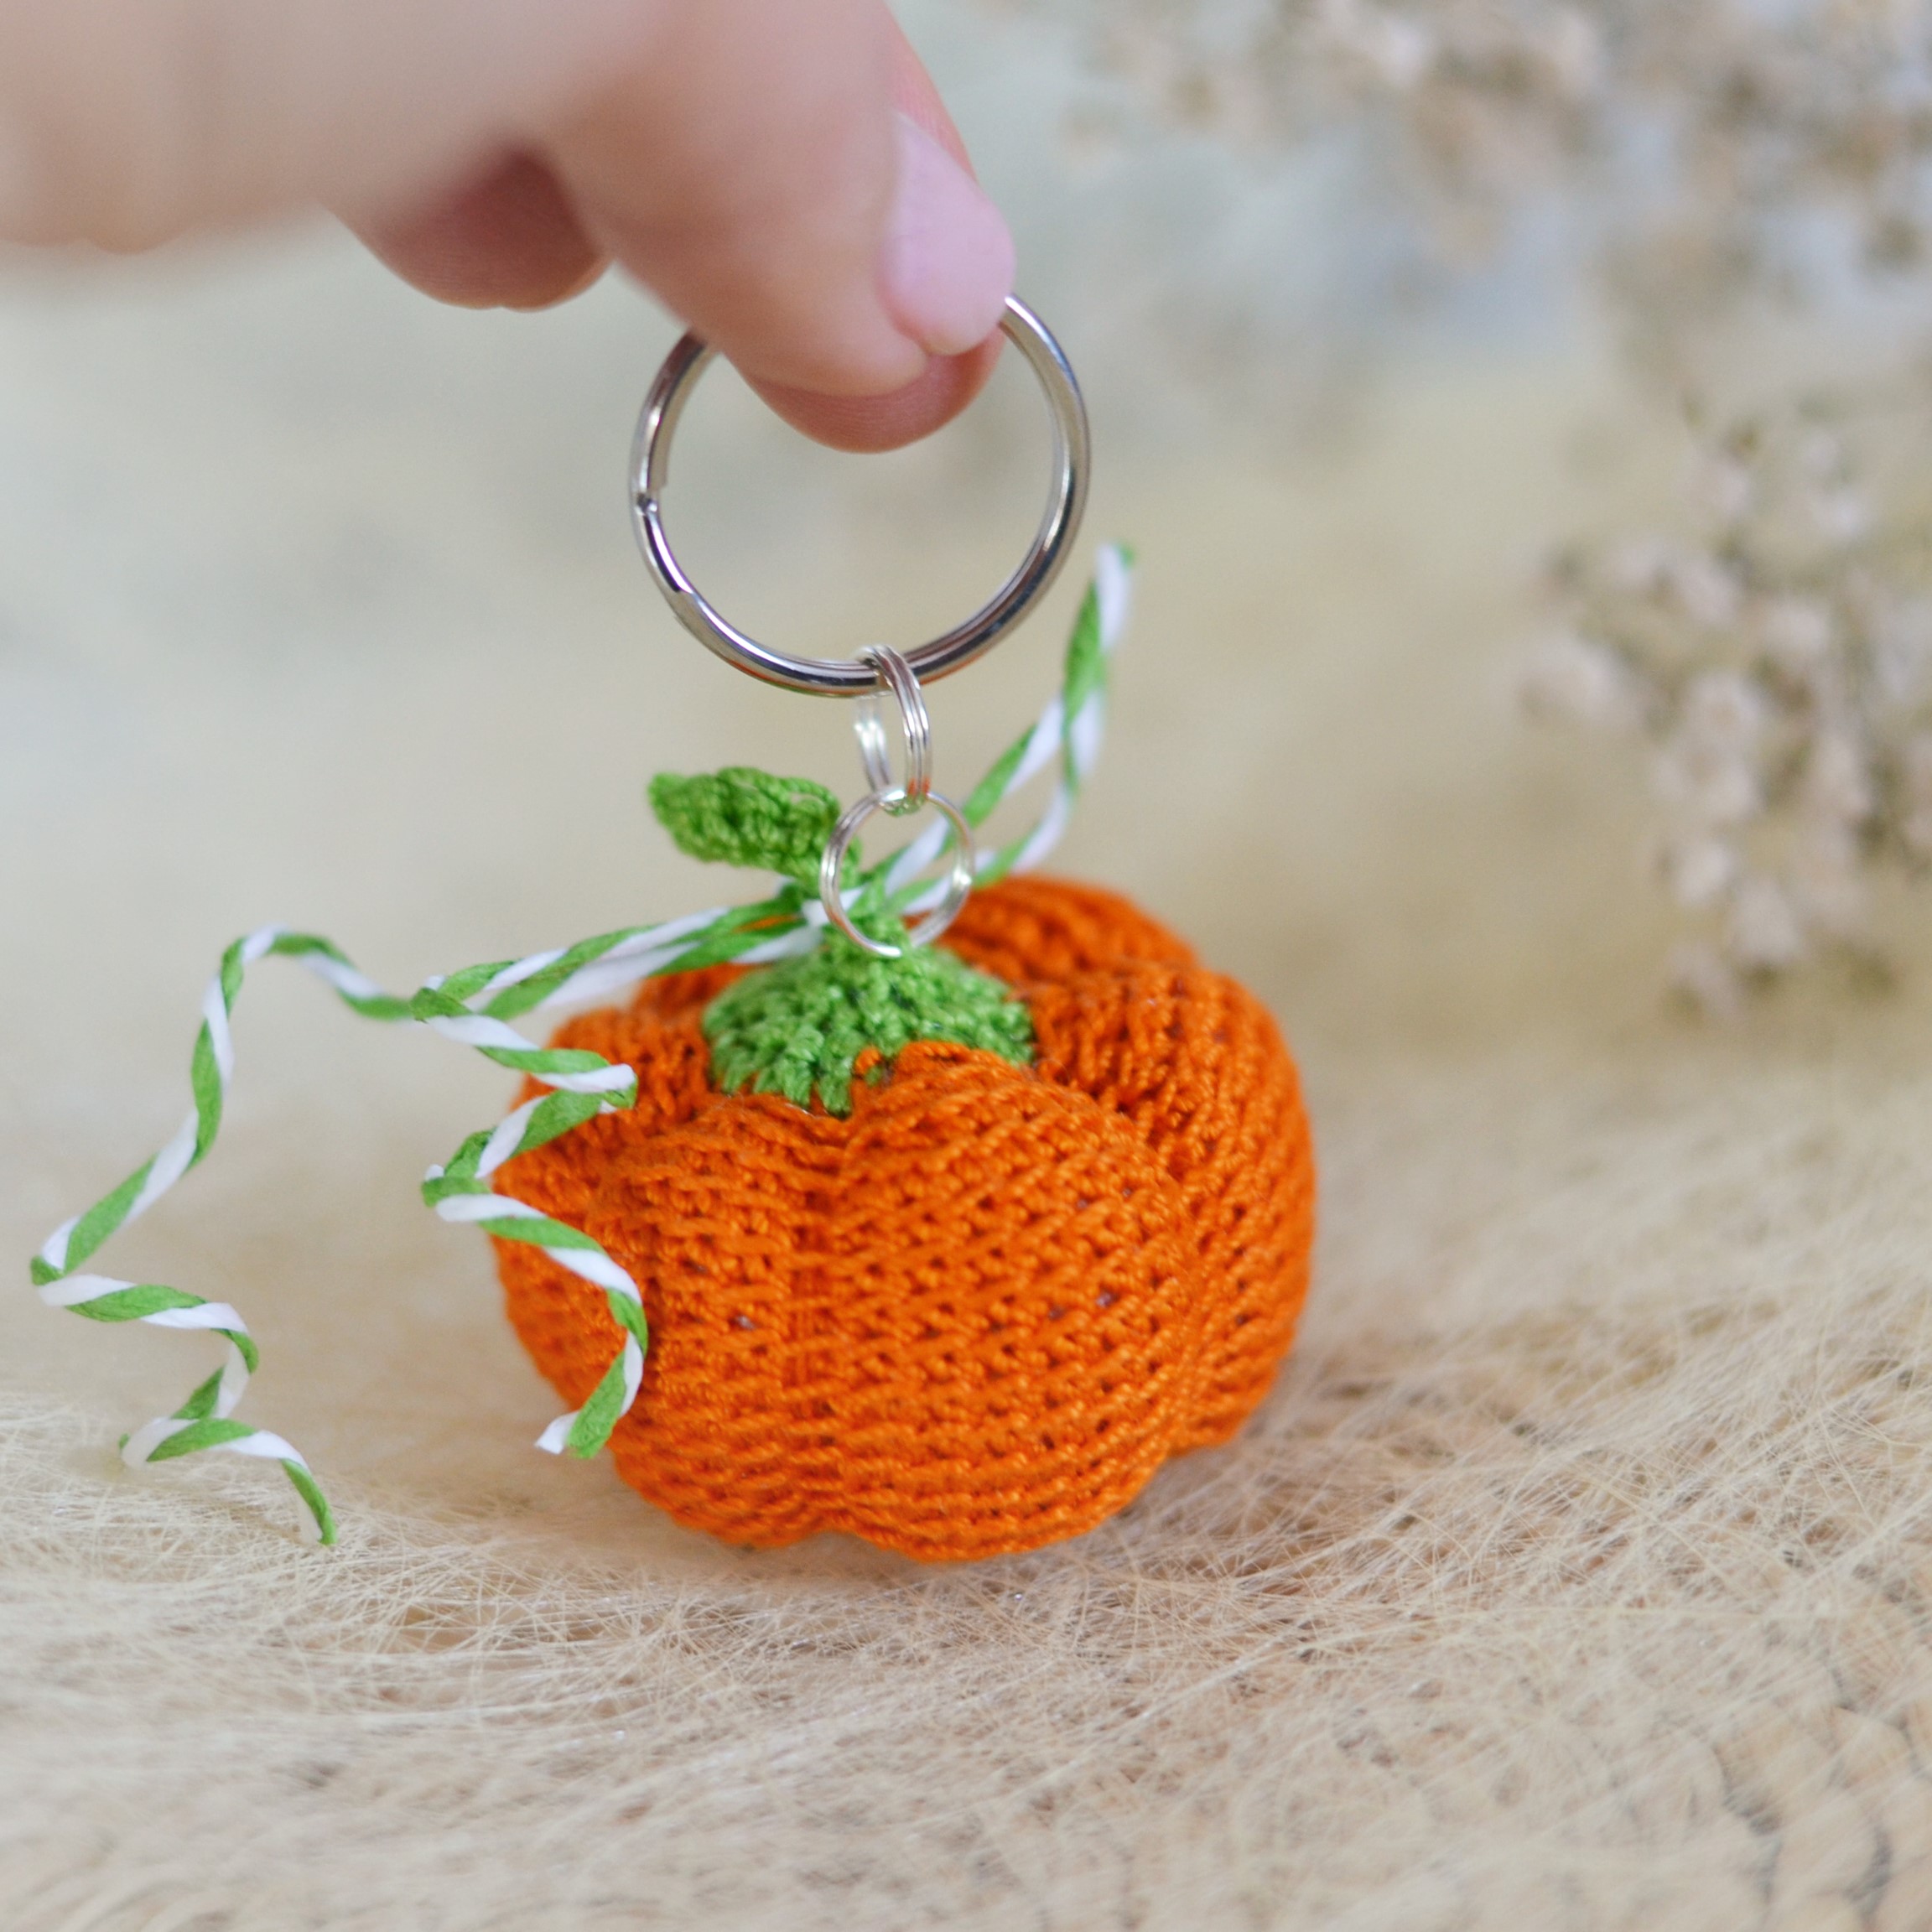 Pumpkin the crochet keychain